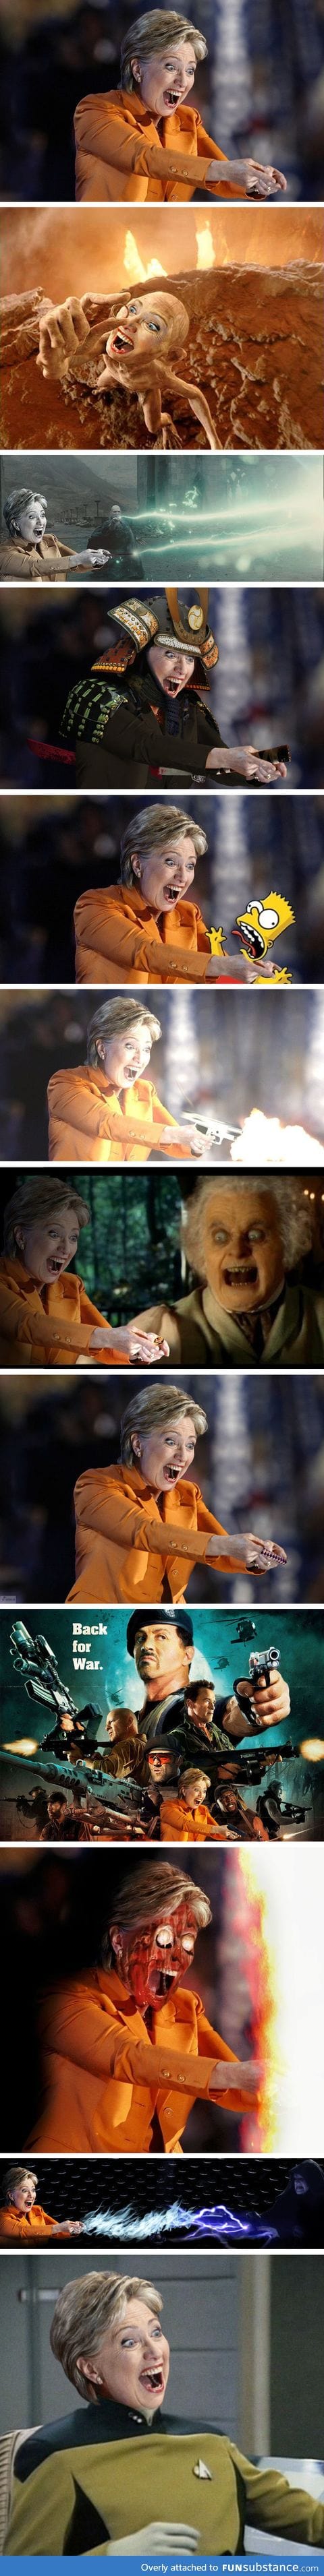 Hillary clinton photoshop